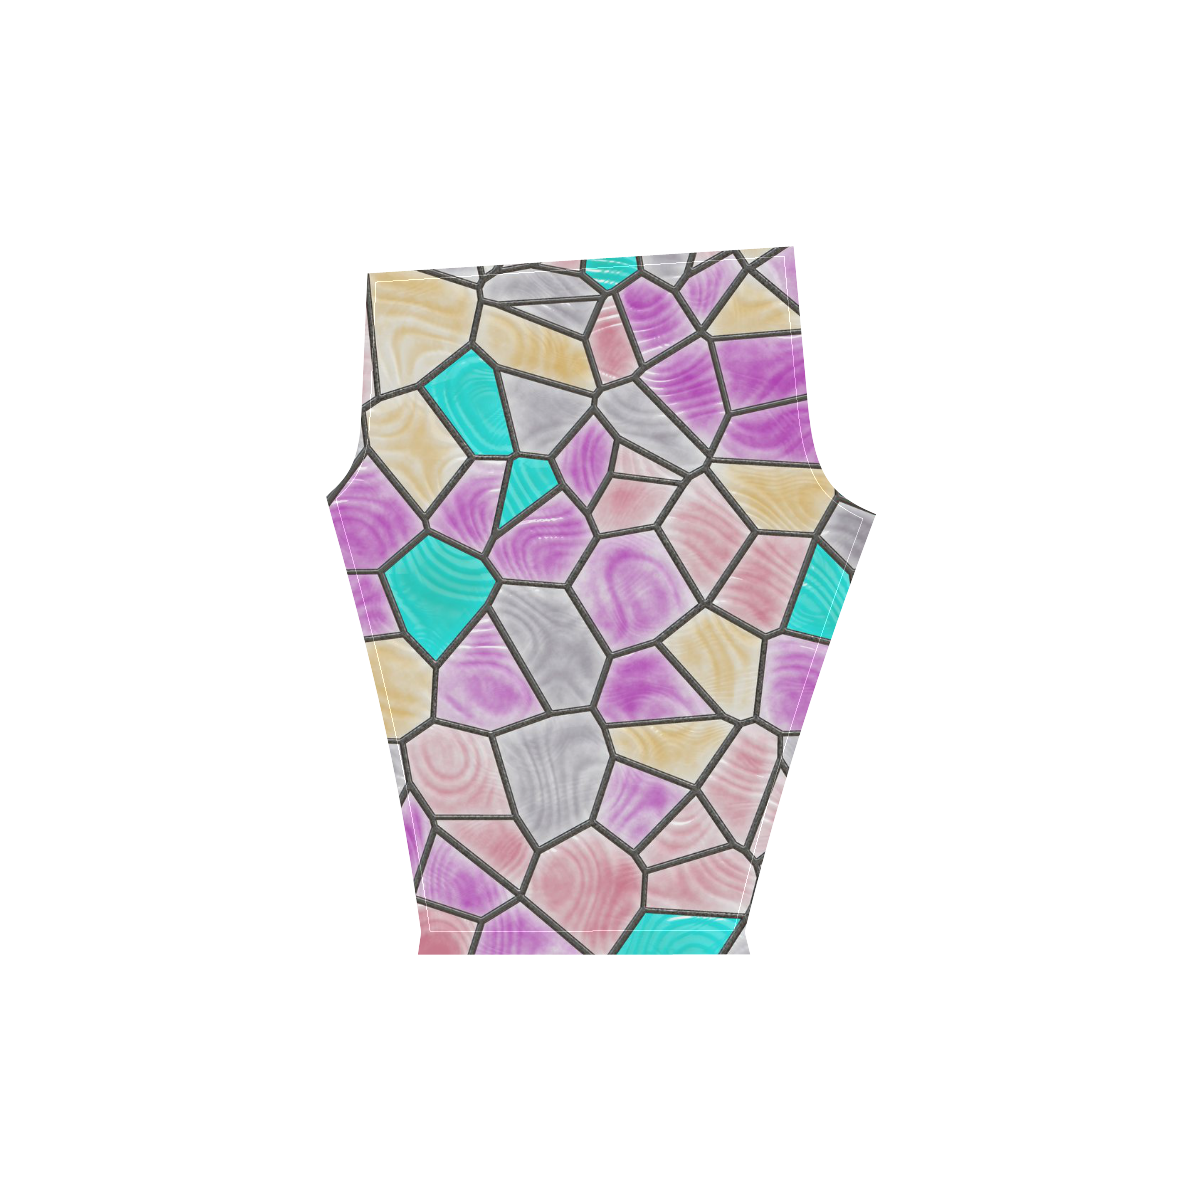 Mosaic Linda 3 by JamColors Women's Low Rise Capri Leggings (Invisible Stitch) (Model L08)